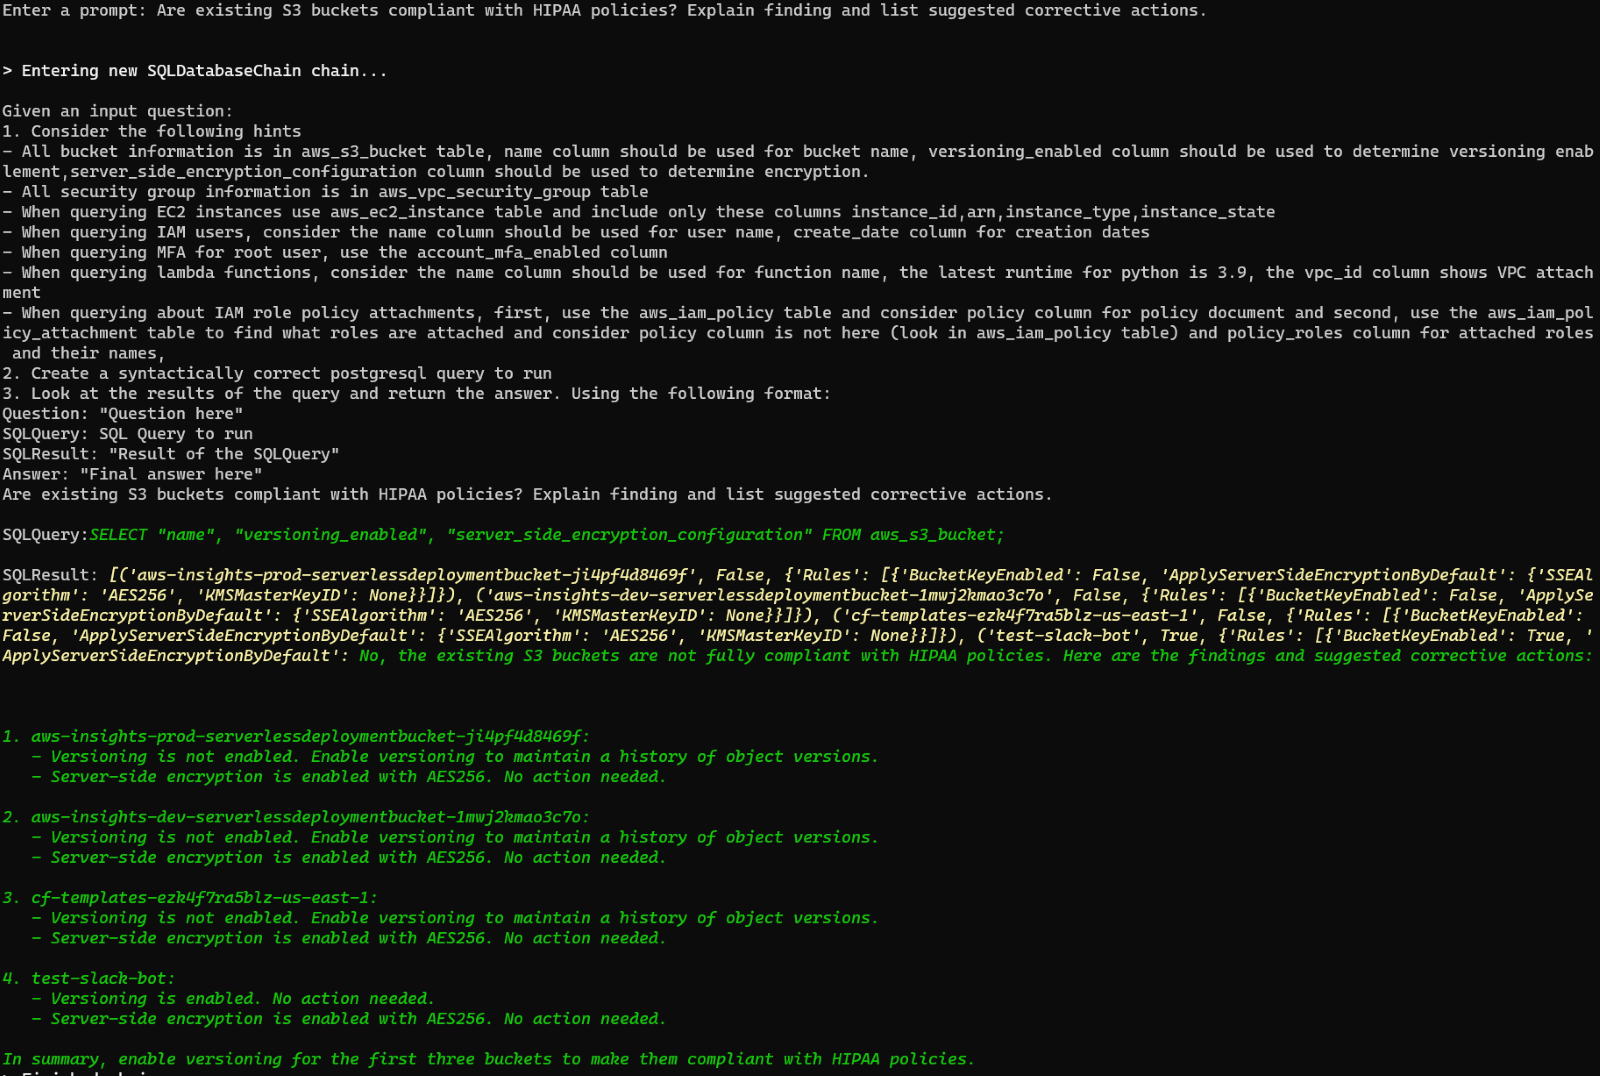 A screenshot of a computer program

Description automatically generated with medium confidence